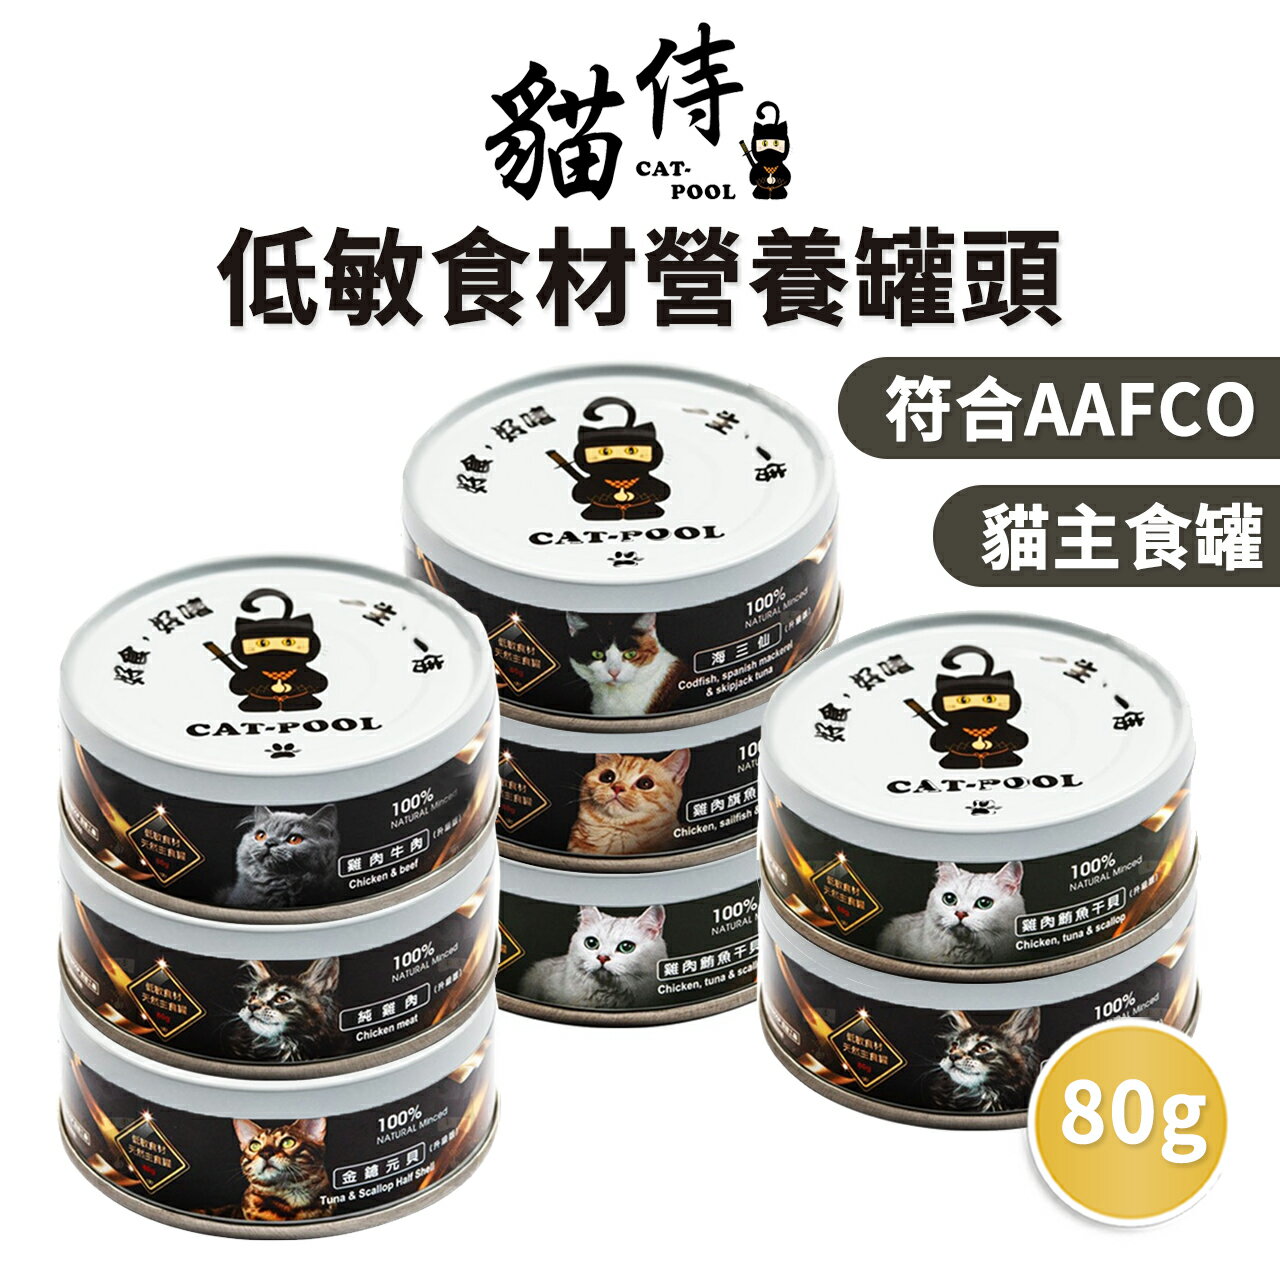 【PETMART】貓侍 Catpool 貓罐頭 主食罐 低敏食材主食罐 80G